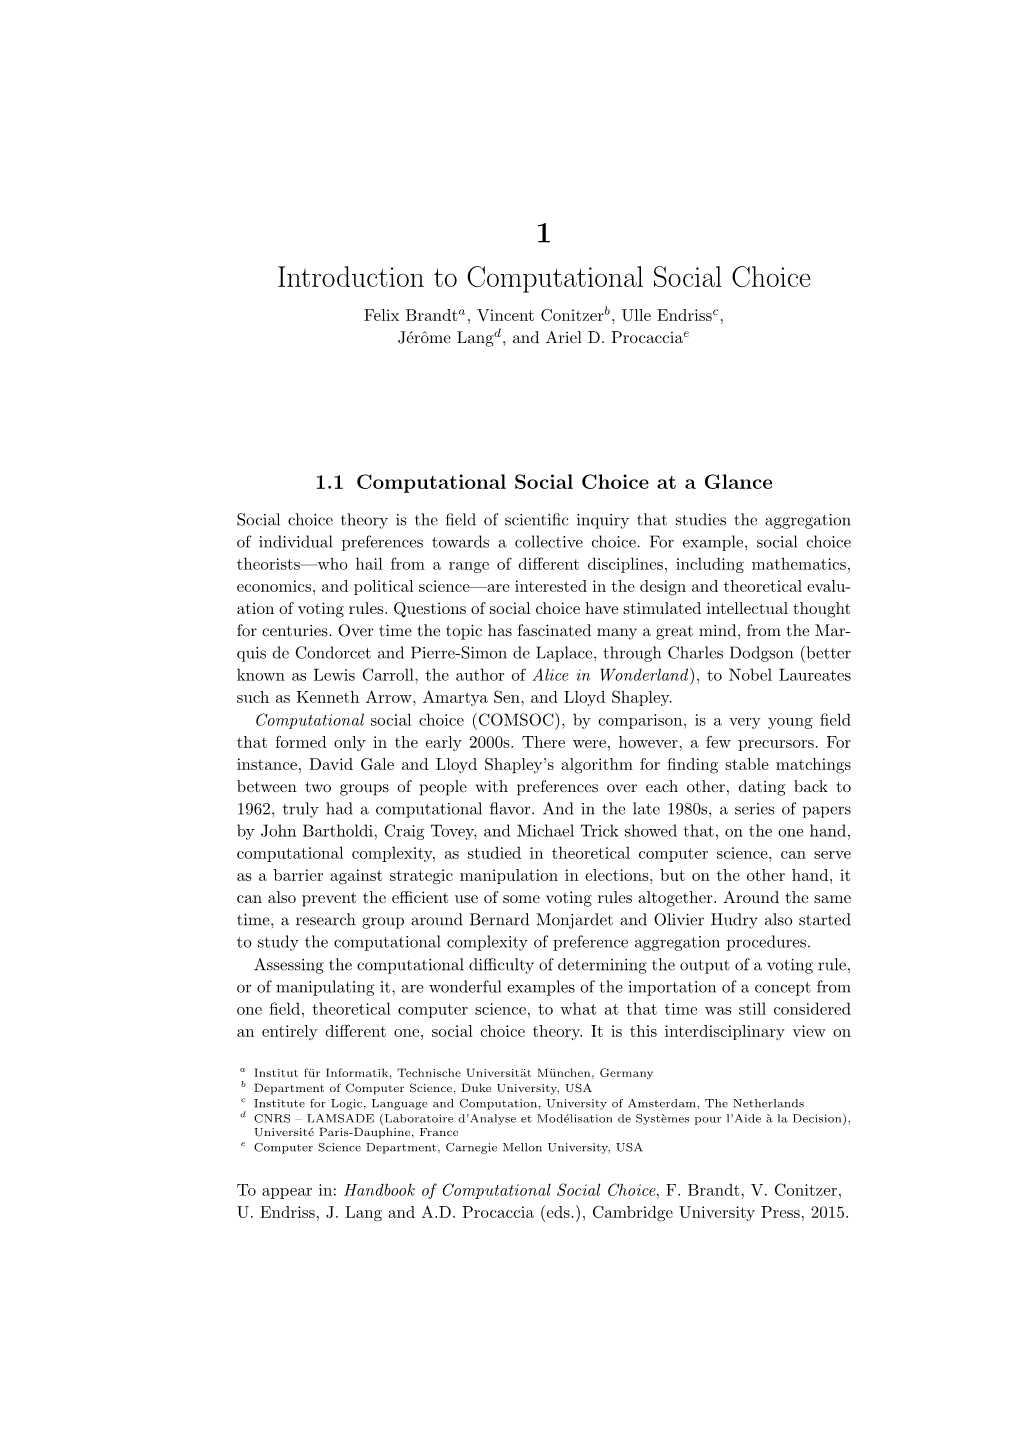 Introduction to Computational Social Choice